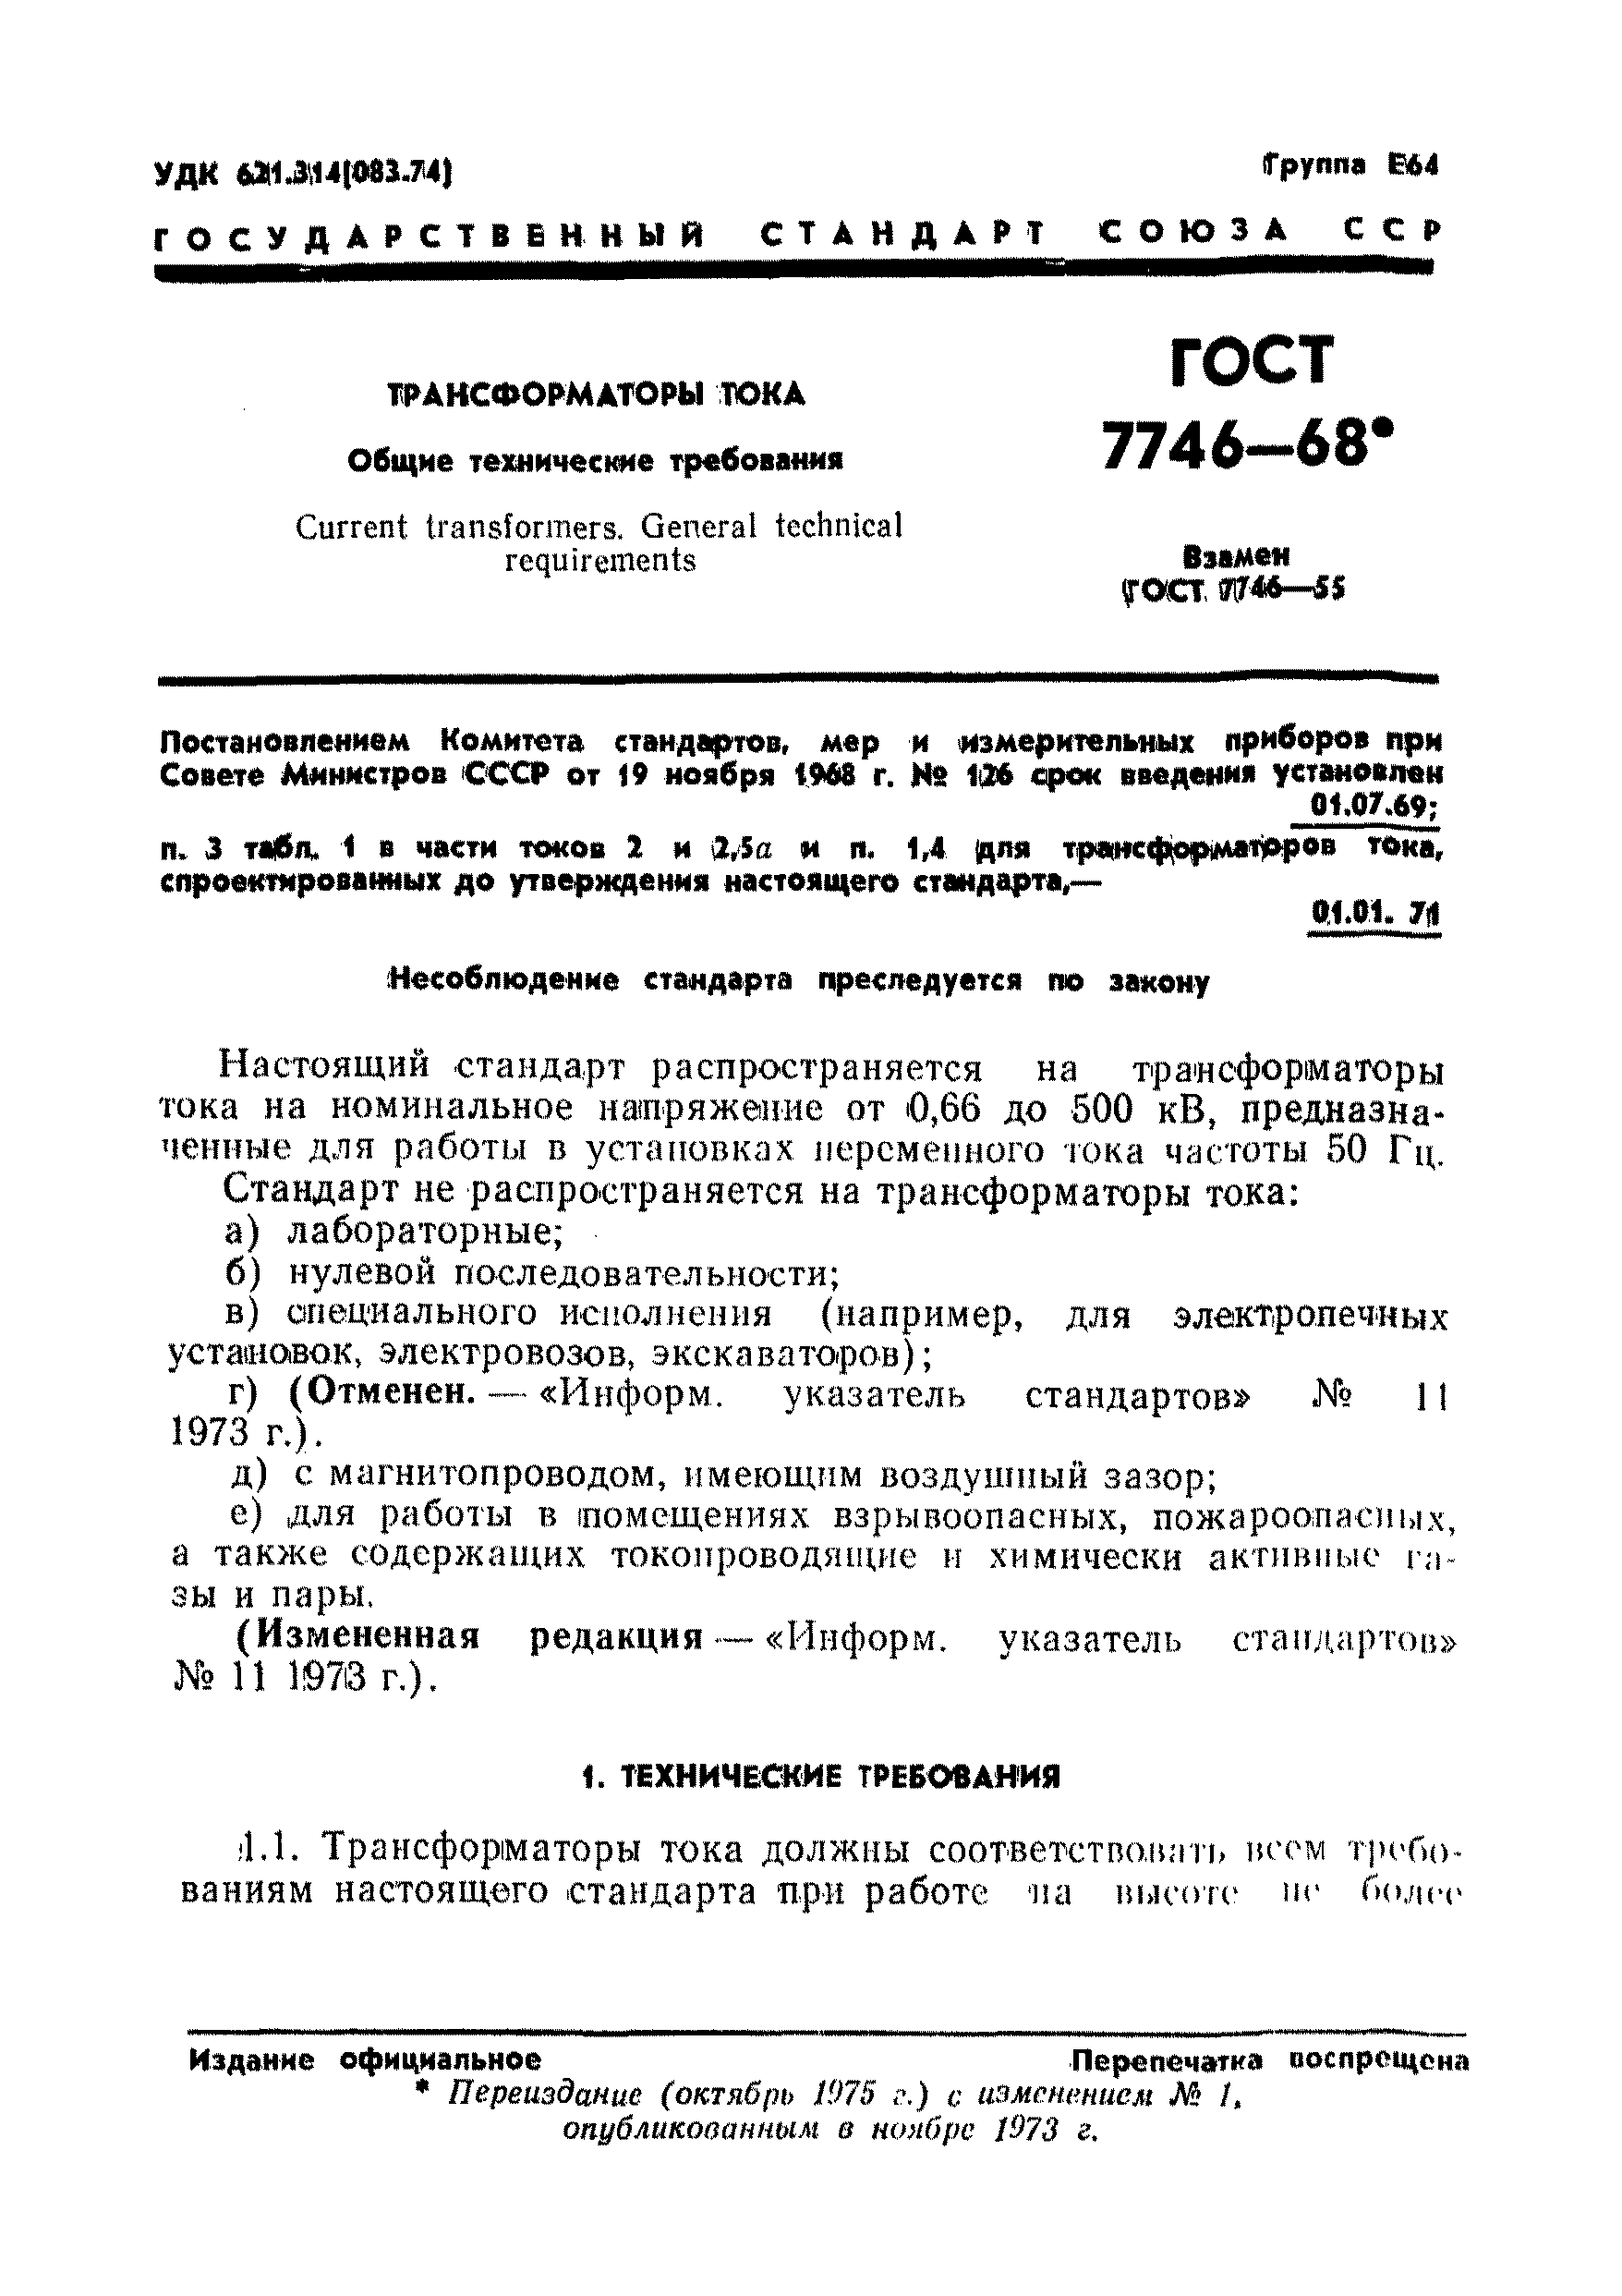 ГОСТ 7746-68